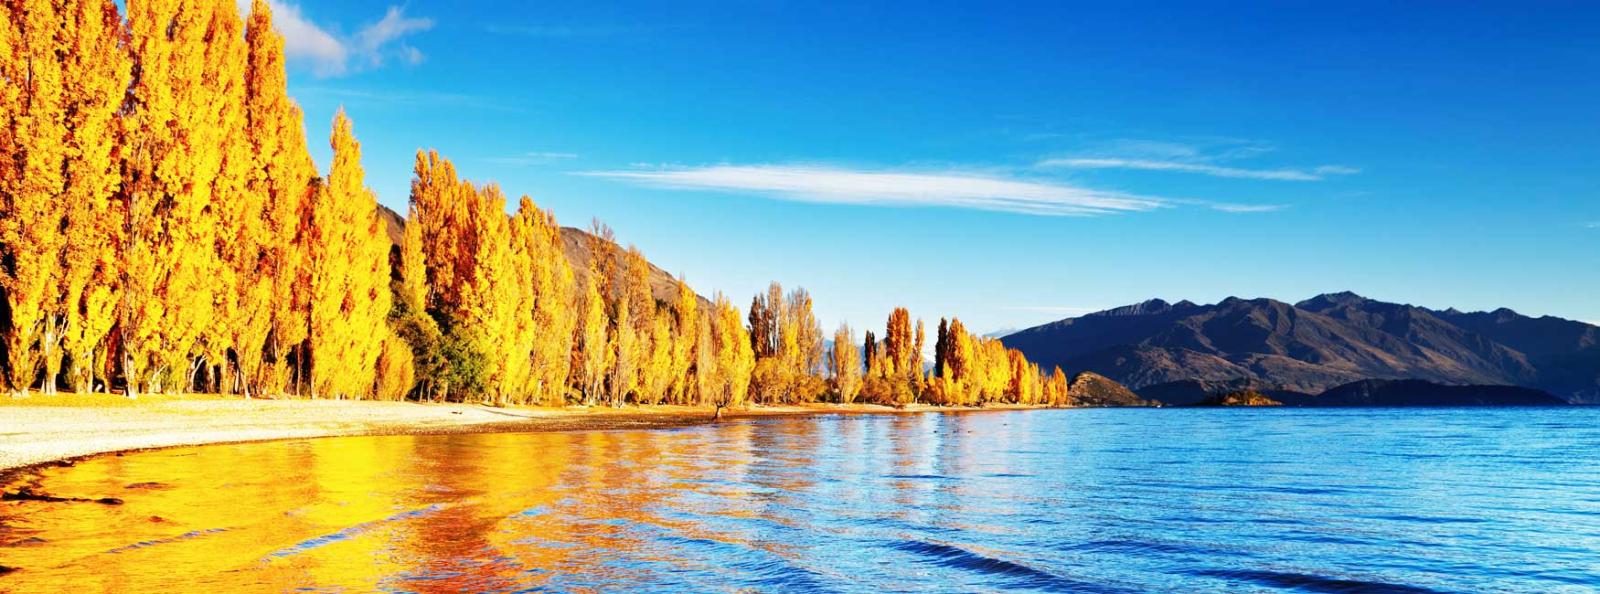 Central Otago Lakes